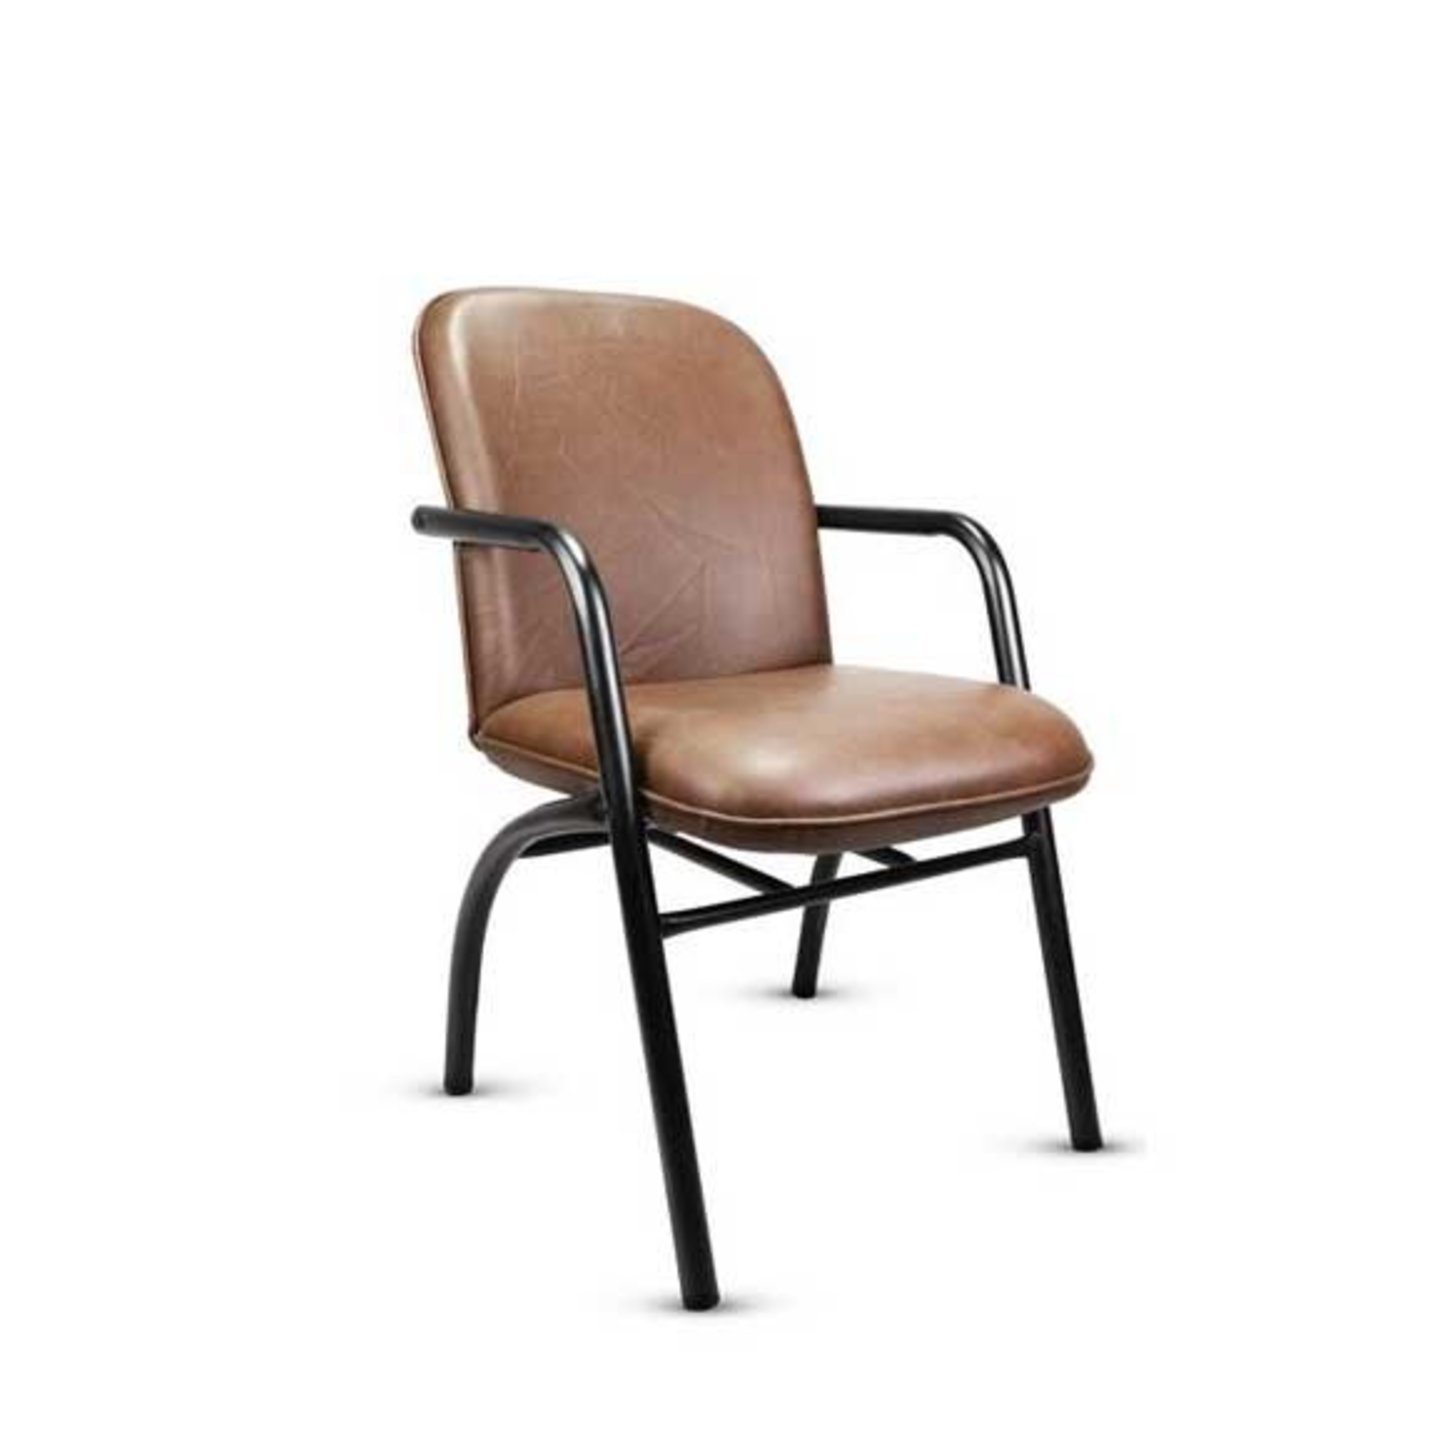 PI Fix Chair PI-206 In Brown Colour